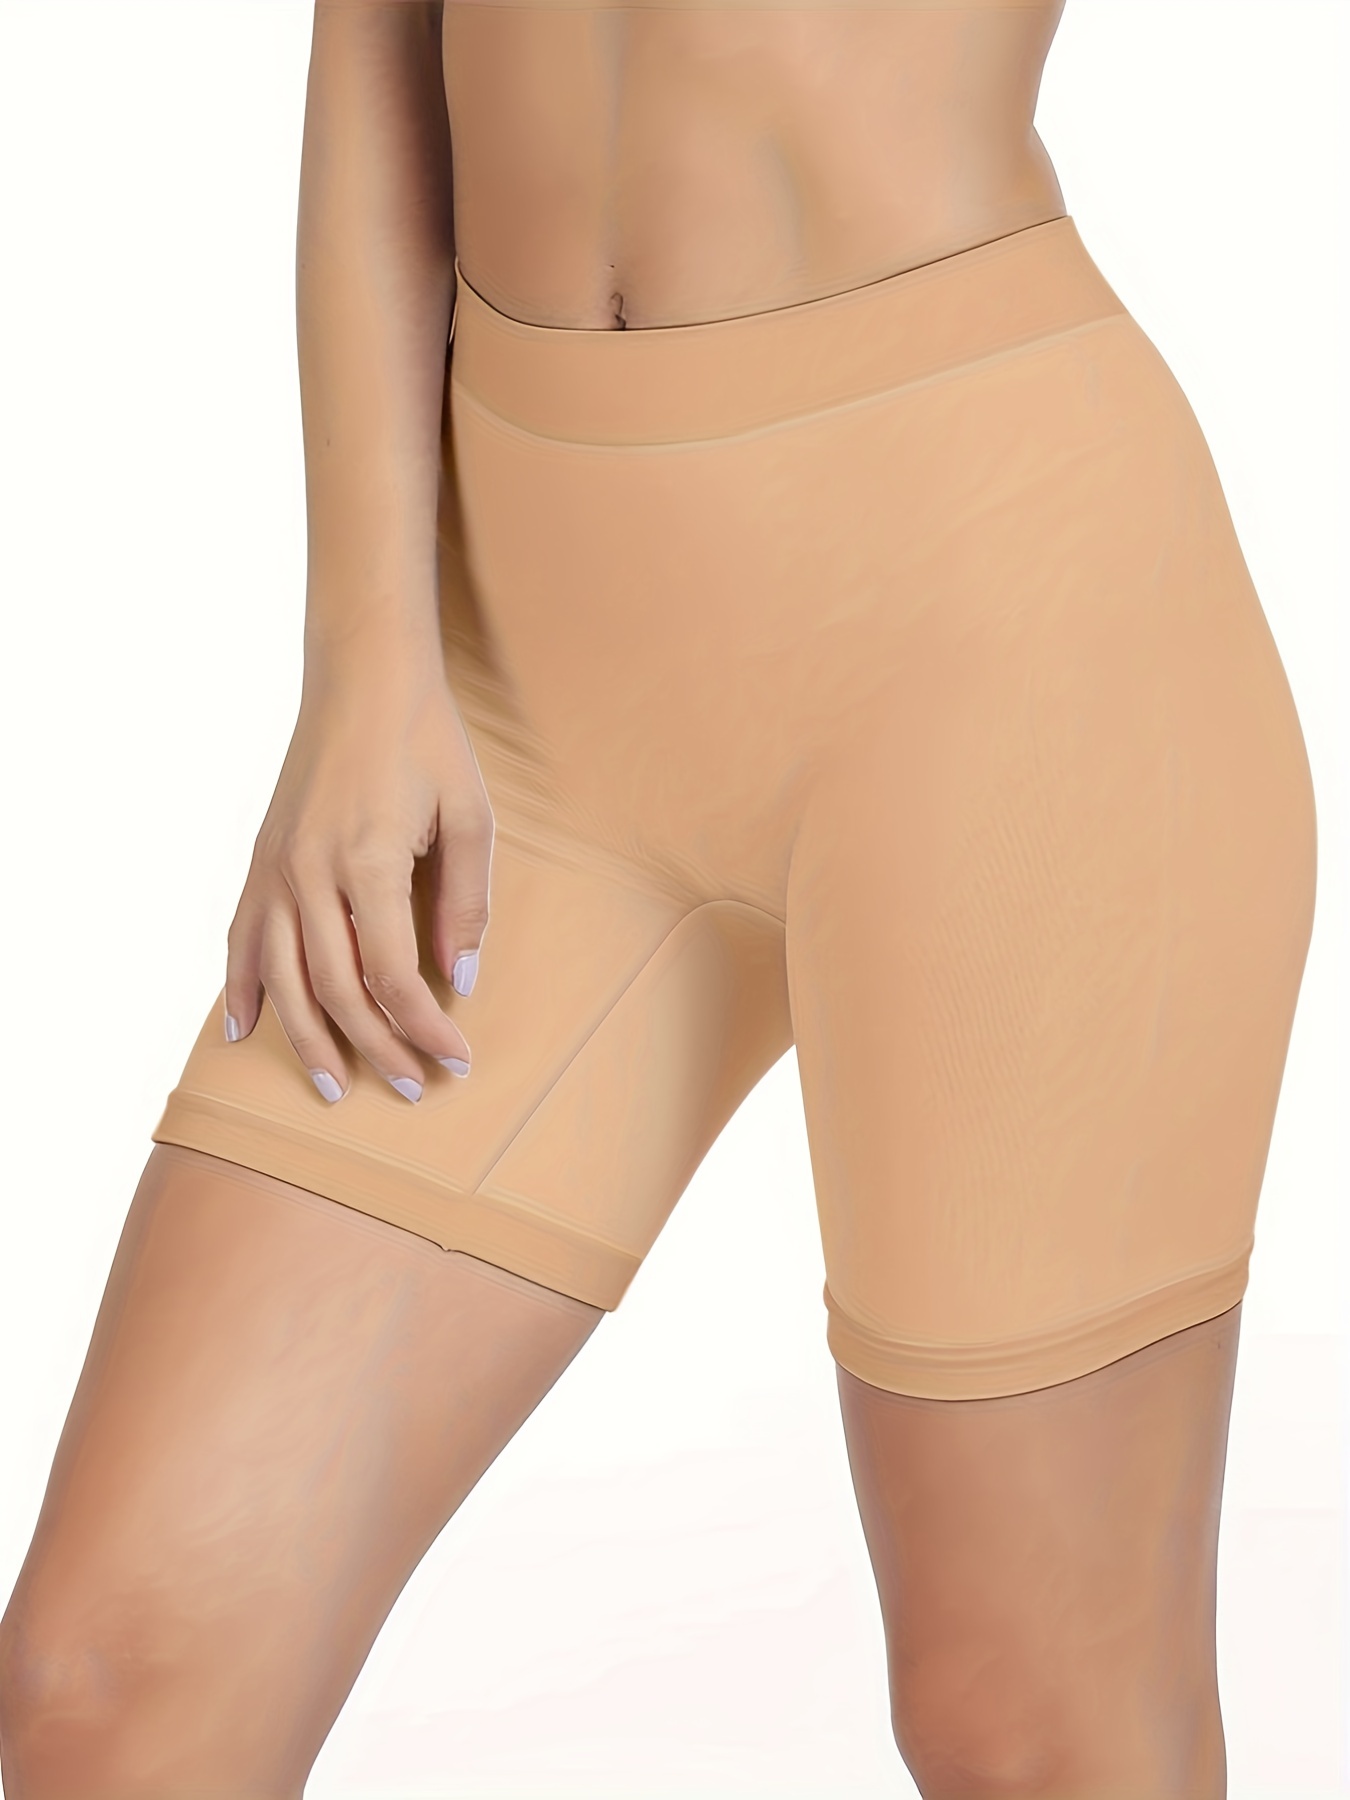 Women's seamless thermal underwear (bottom)